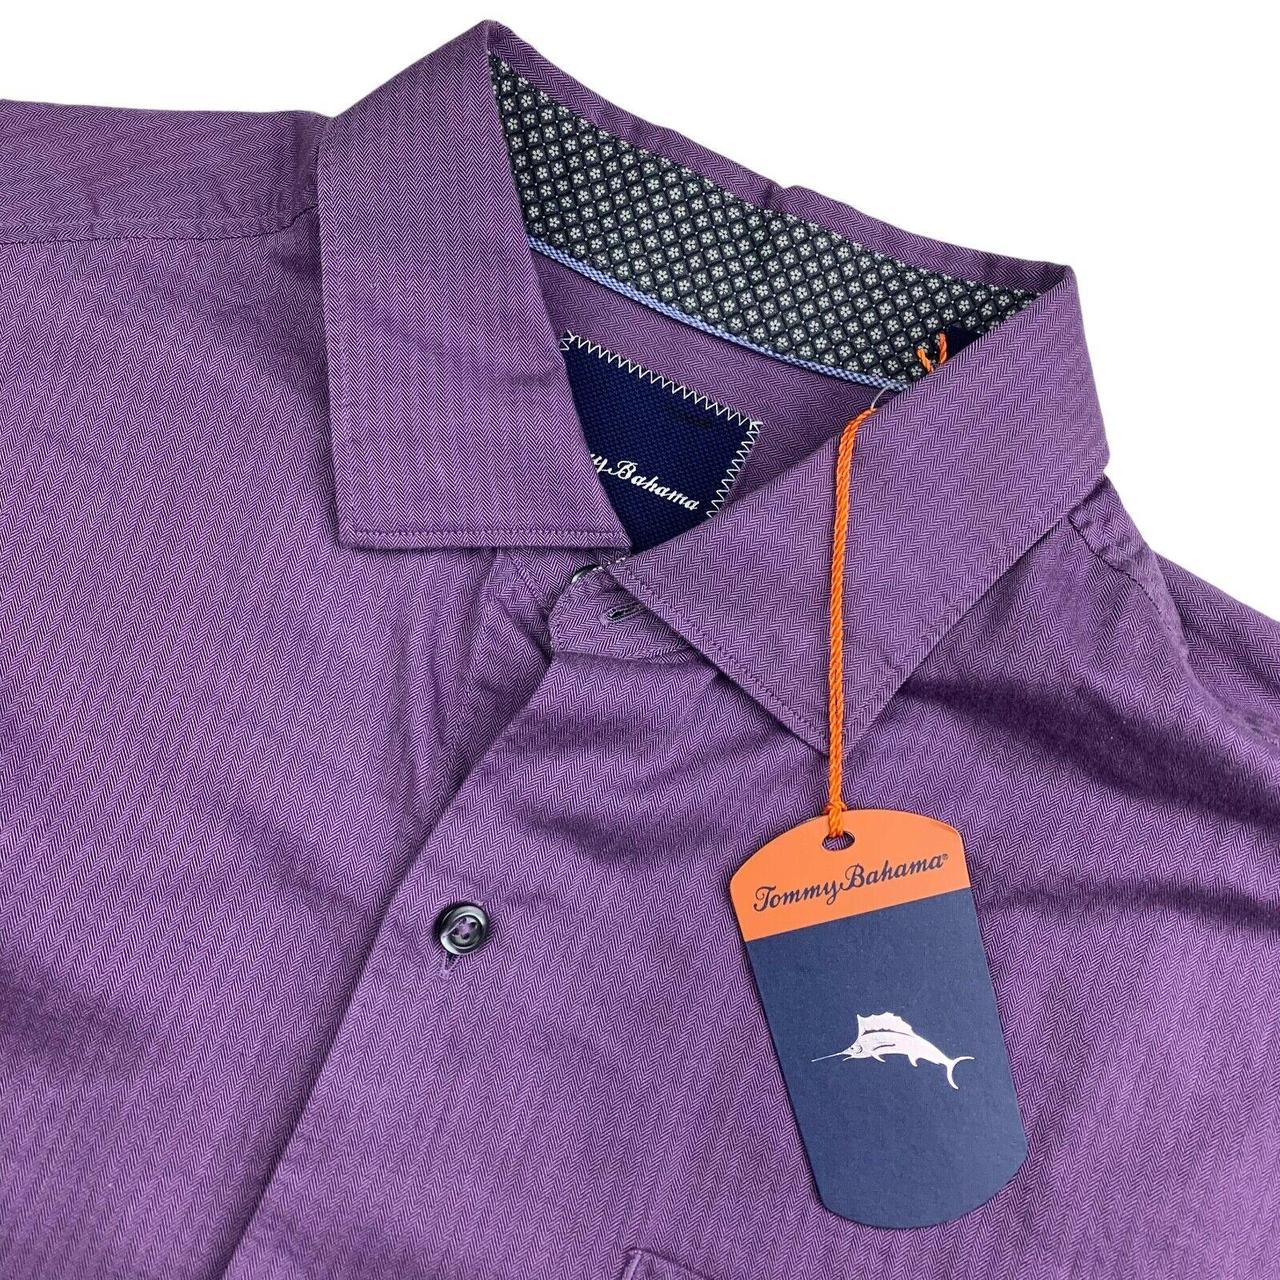 NEW Brooks Brothers Men's Cotton L/S Button Shirt... - Depop